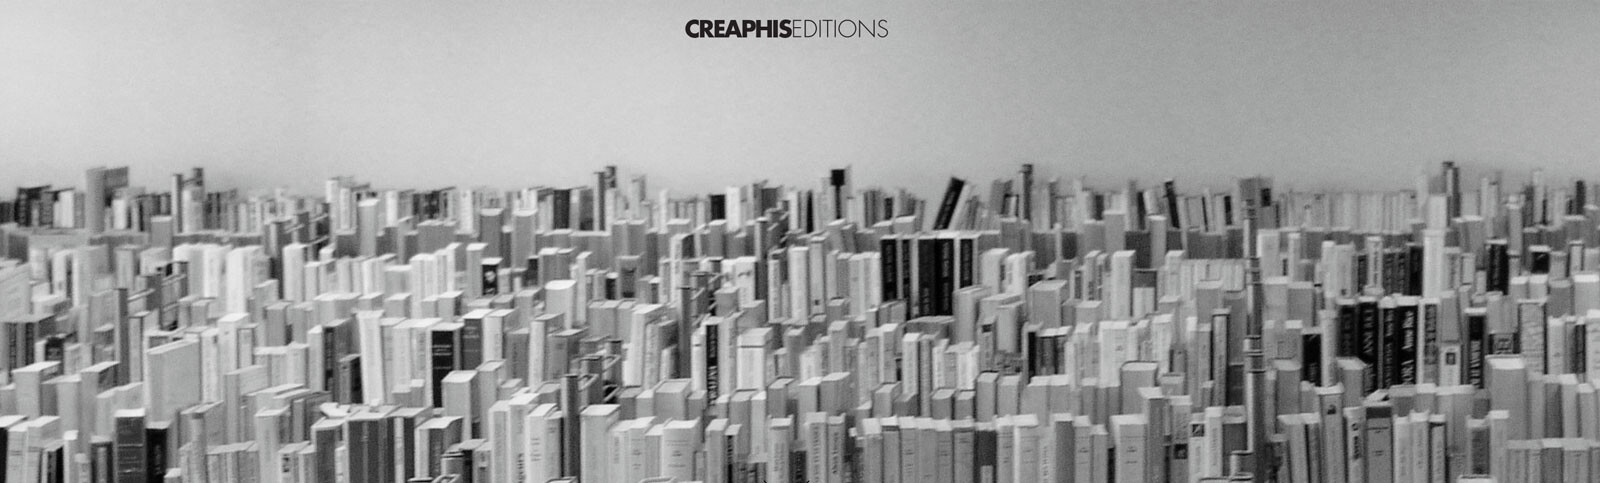 Creaphis Editions